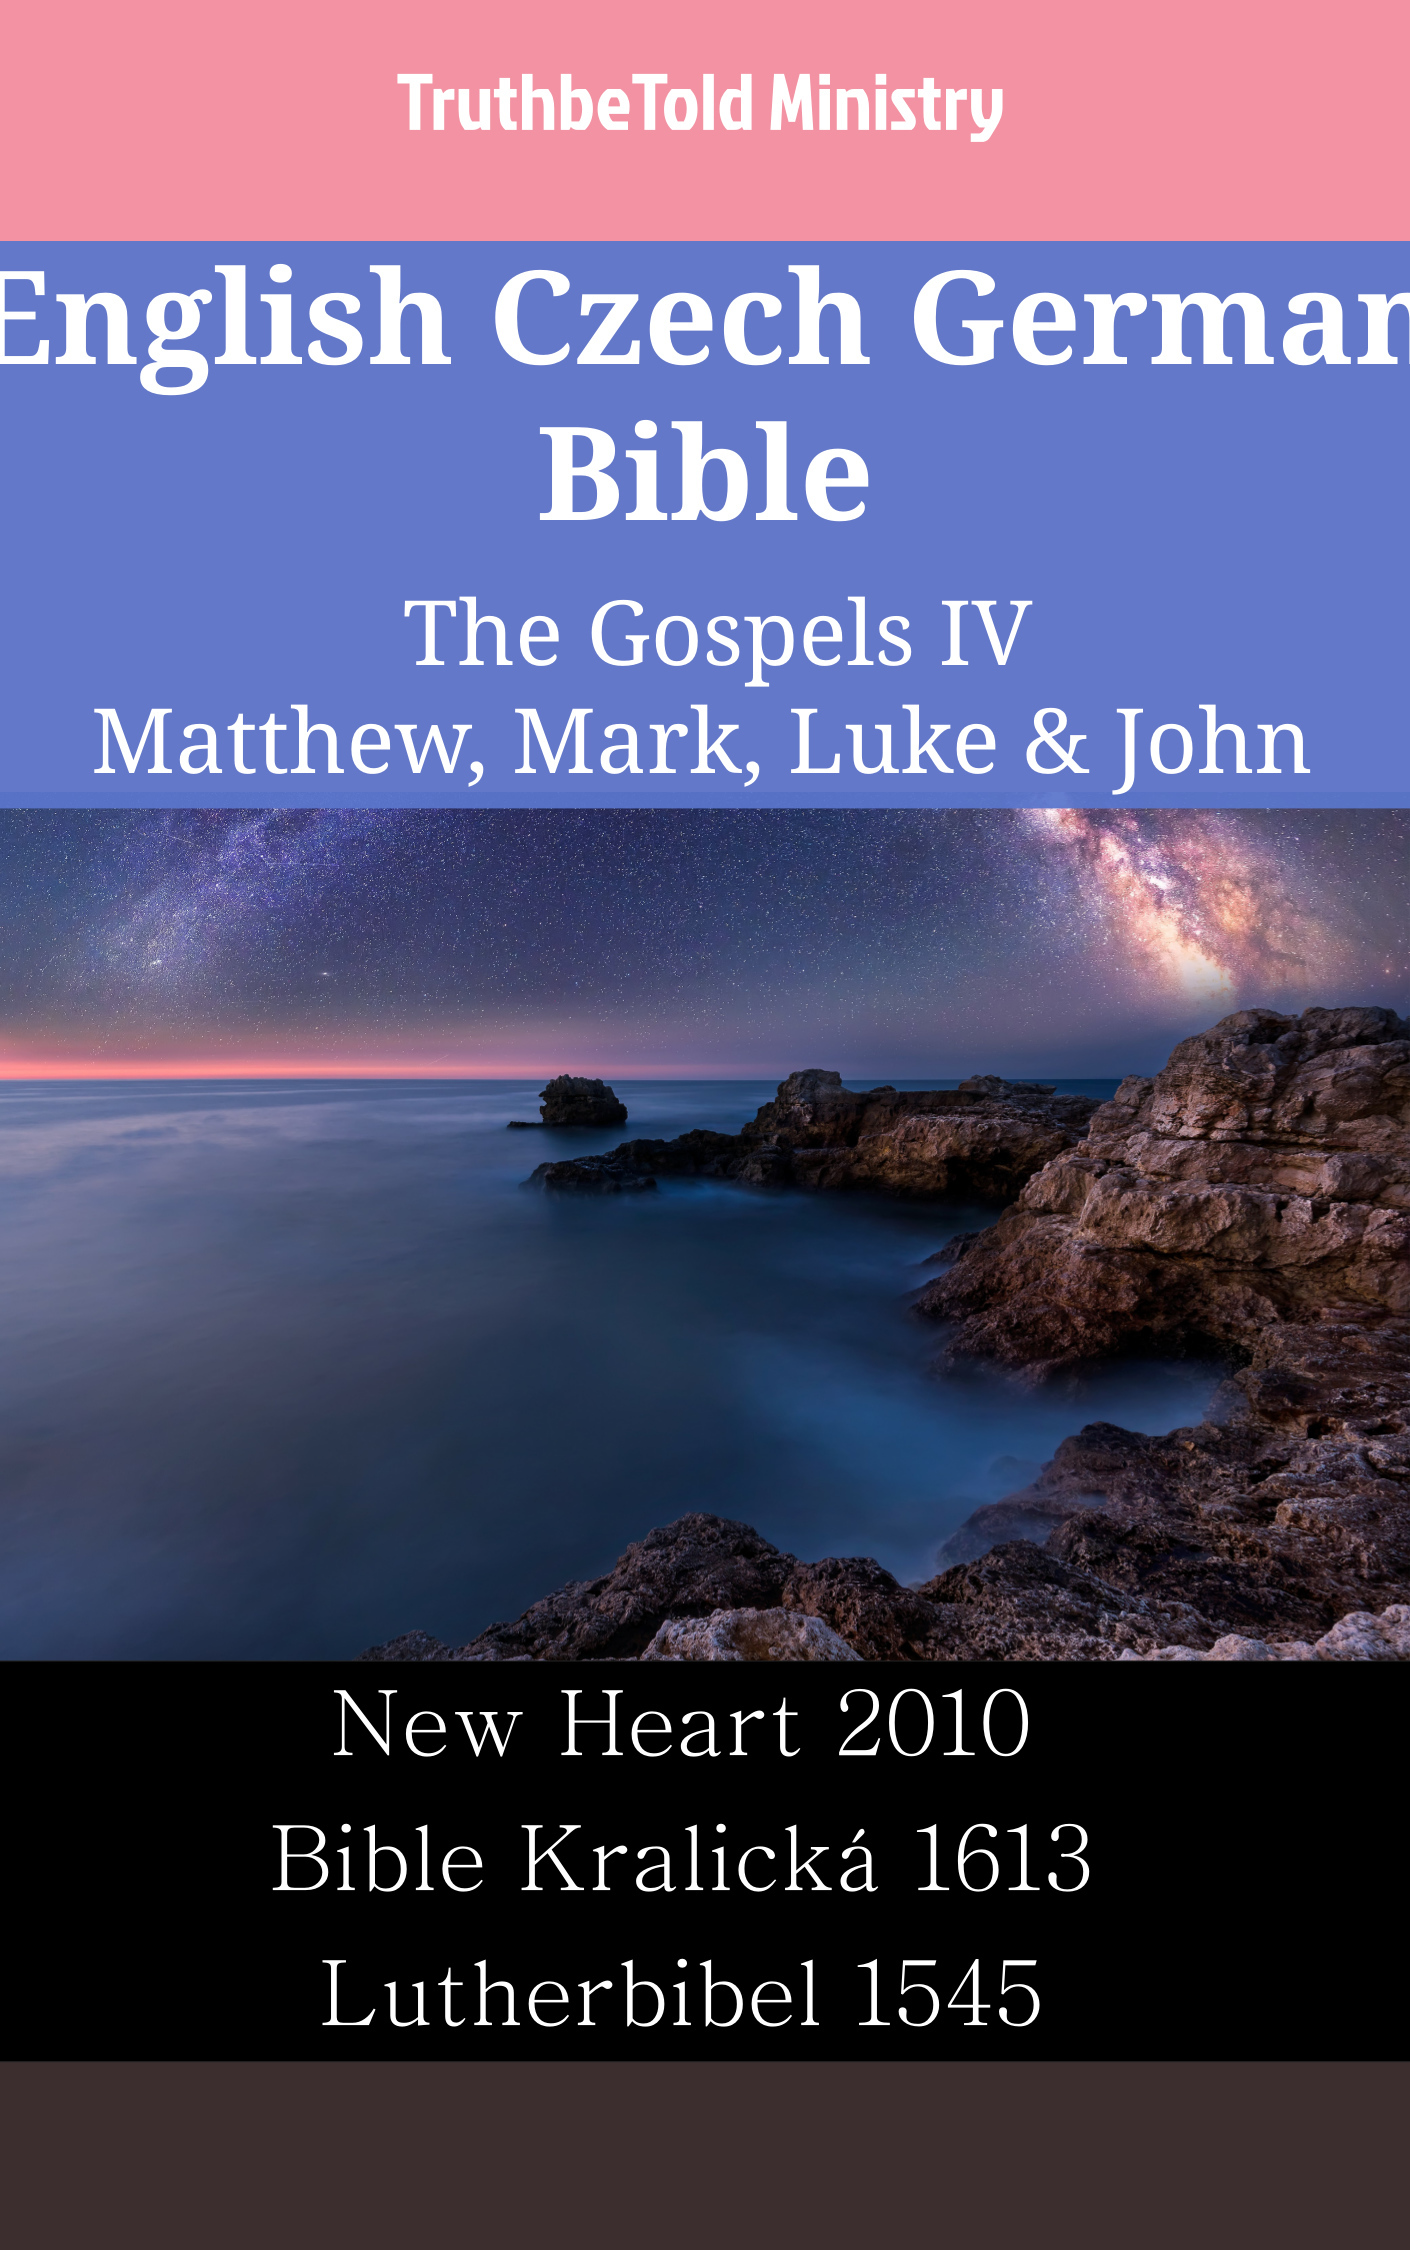 English Czech German Bible - The Gospels IV - Matthew, Mark, Luke & John